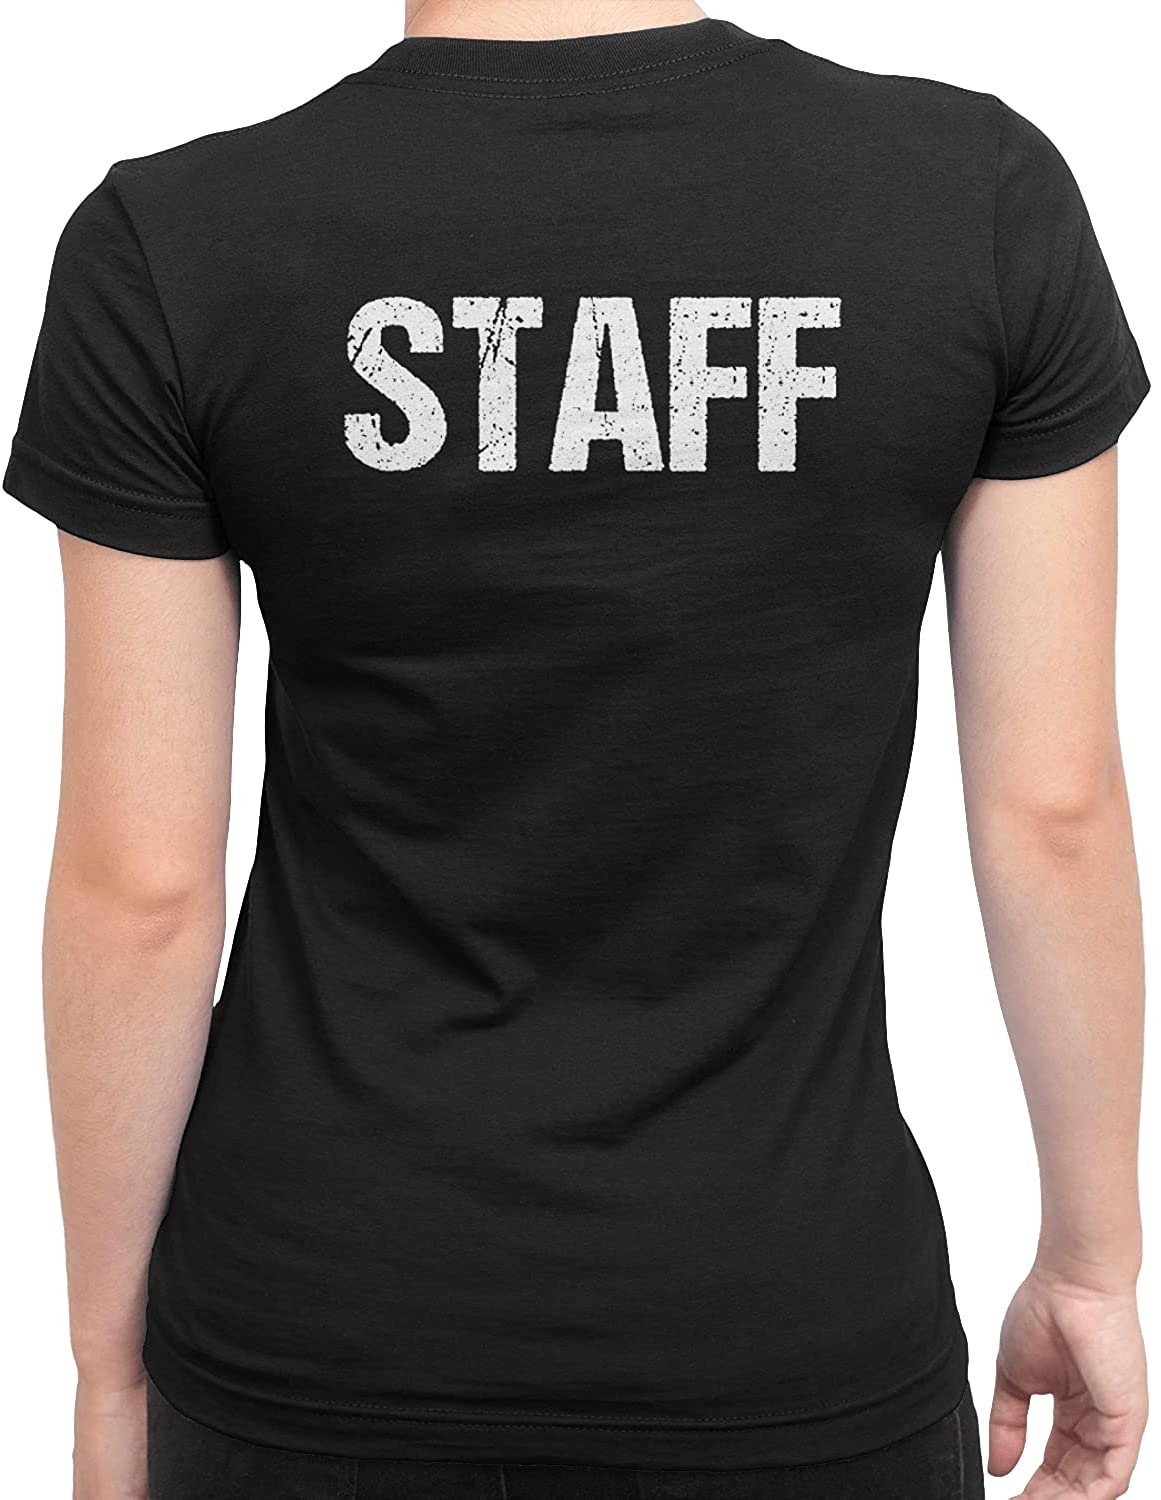 Staff Ladies Short Sleeve T-Shirt (Distressed Design, Black & White)